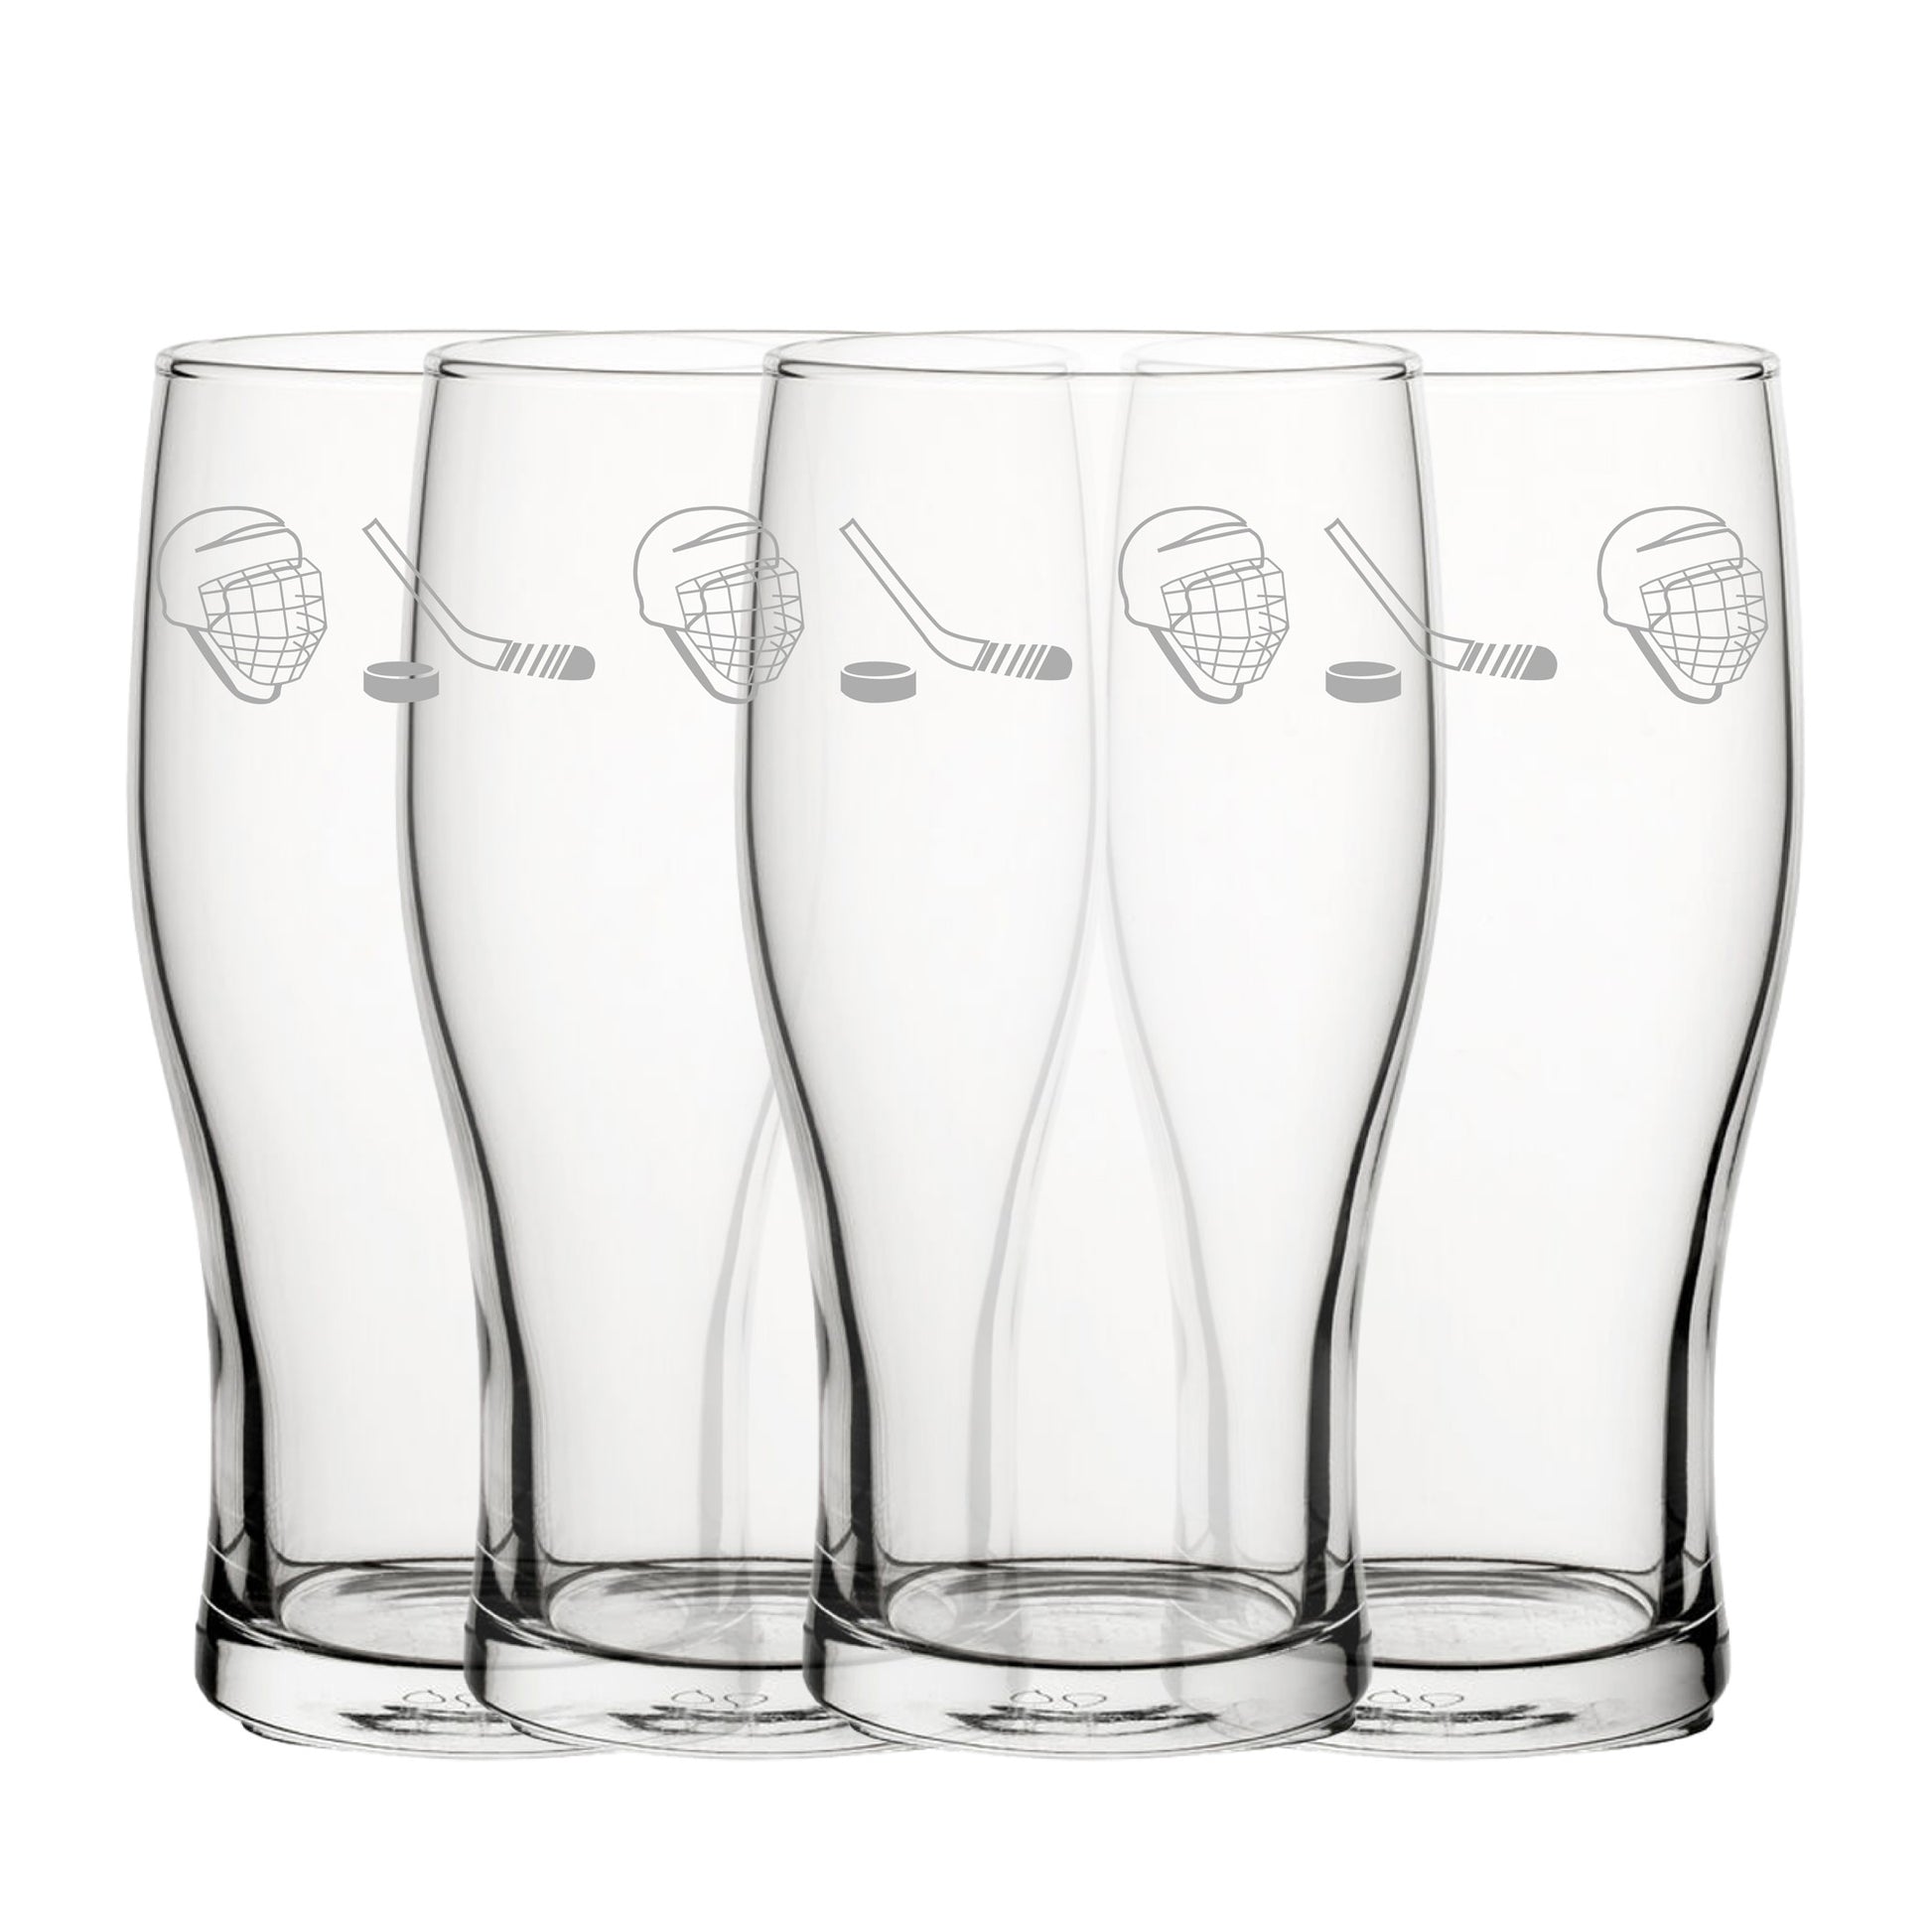 Engraved Ice Hockey Pattern Pint Glass Set of 4, 20oz Tulip Glasses Image 2